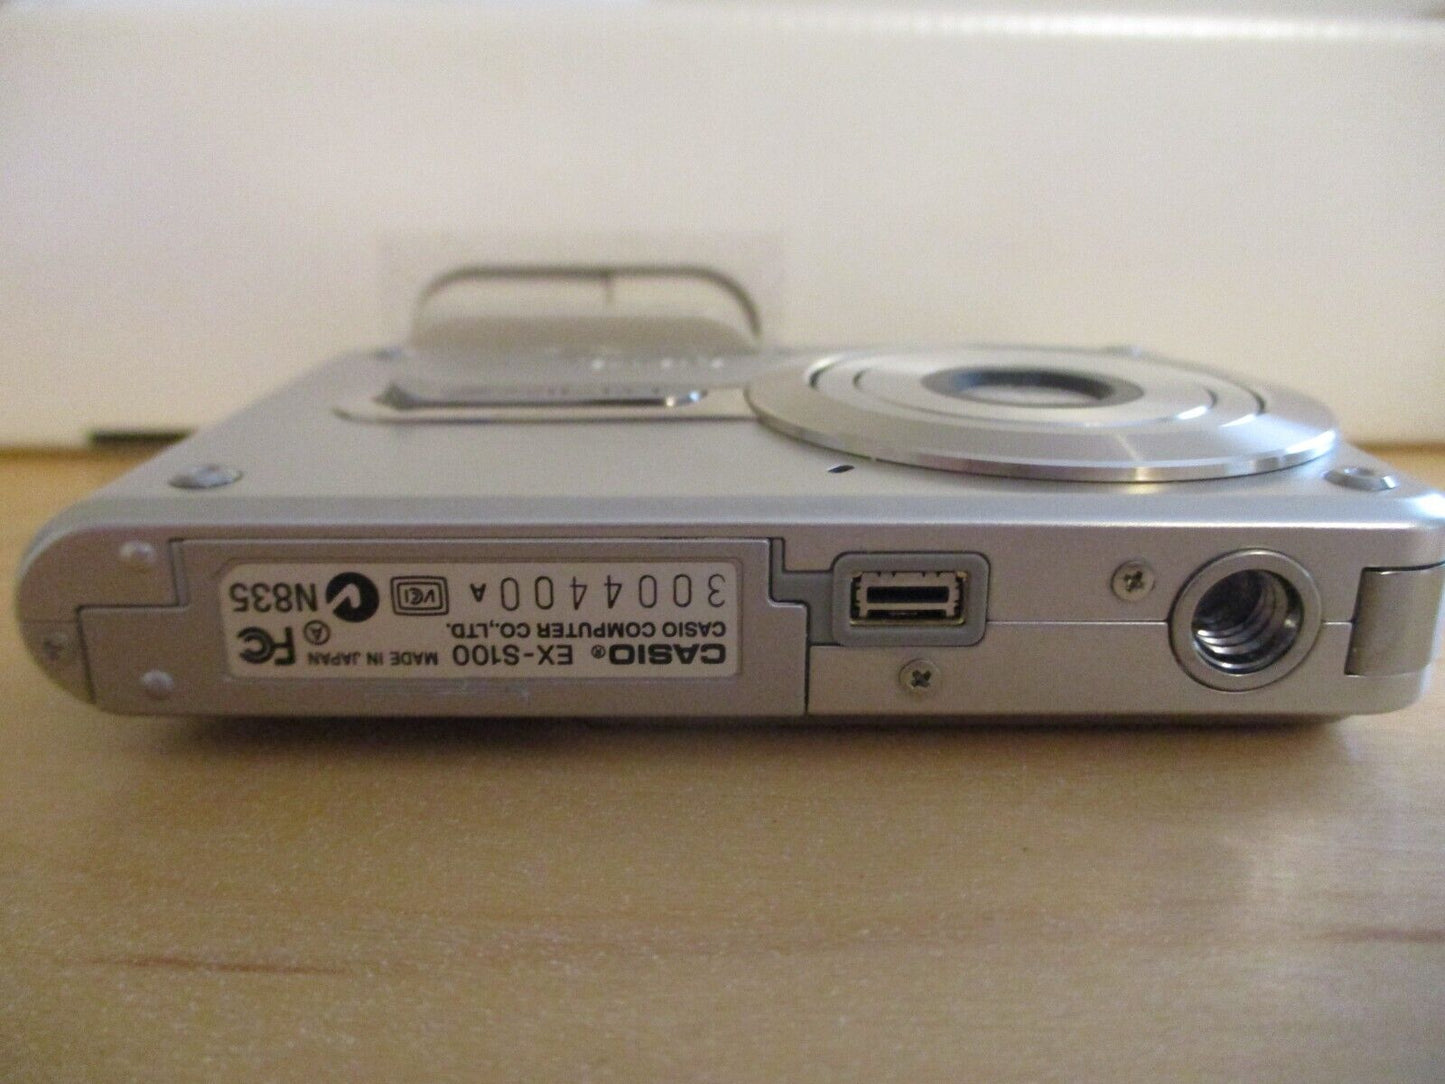 Casio EXILIM EX-S100 3.2 MP Digital Camera New in Original Box